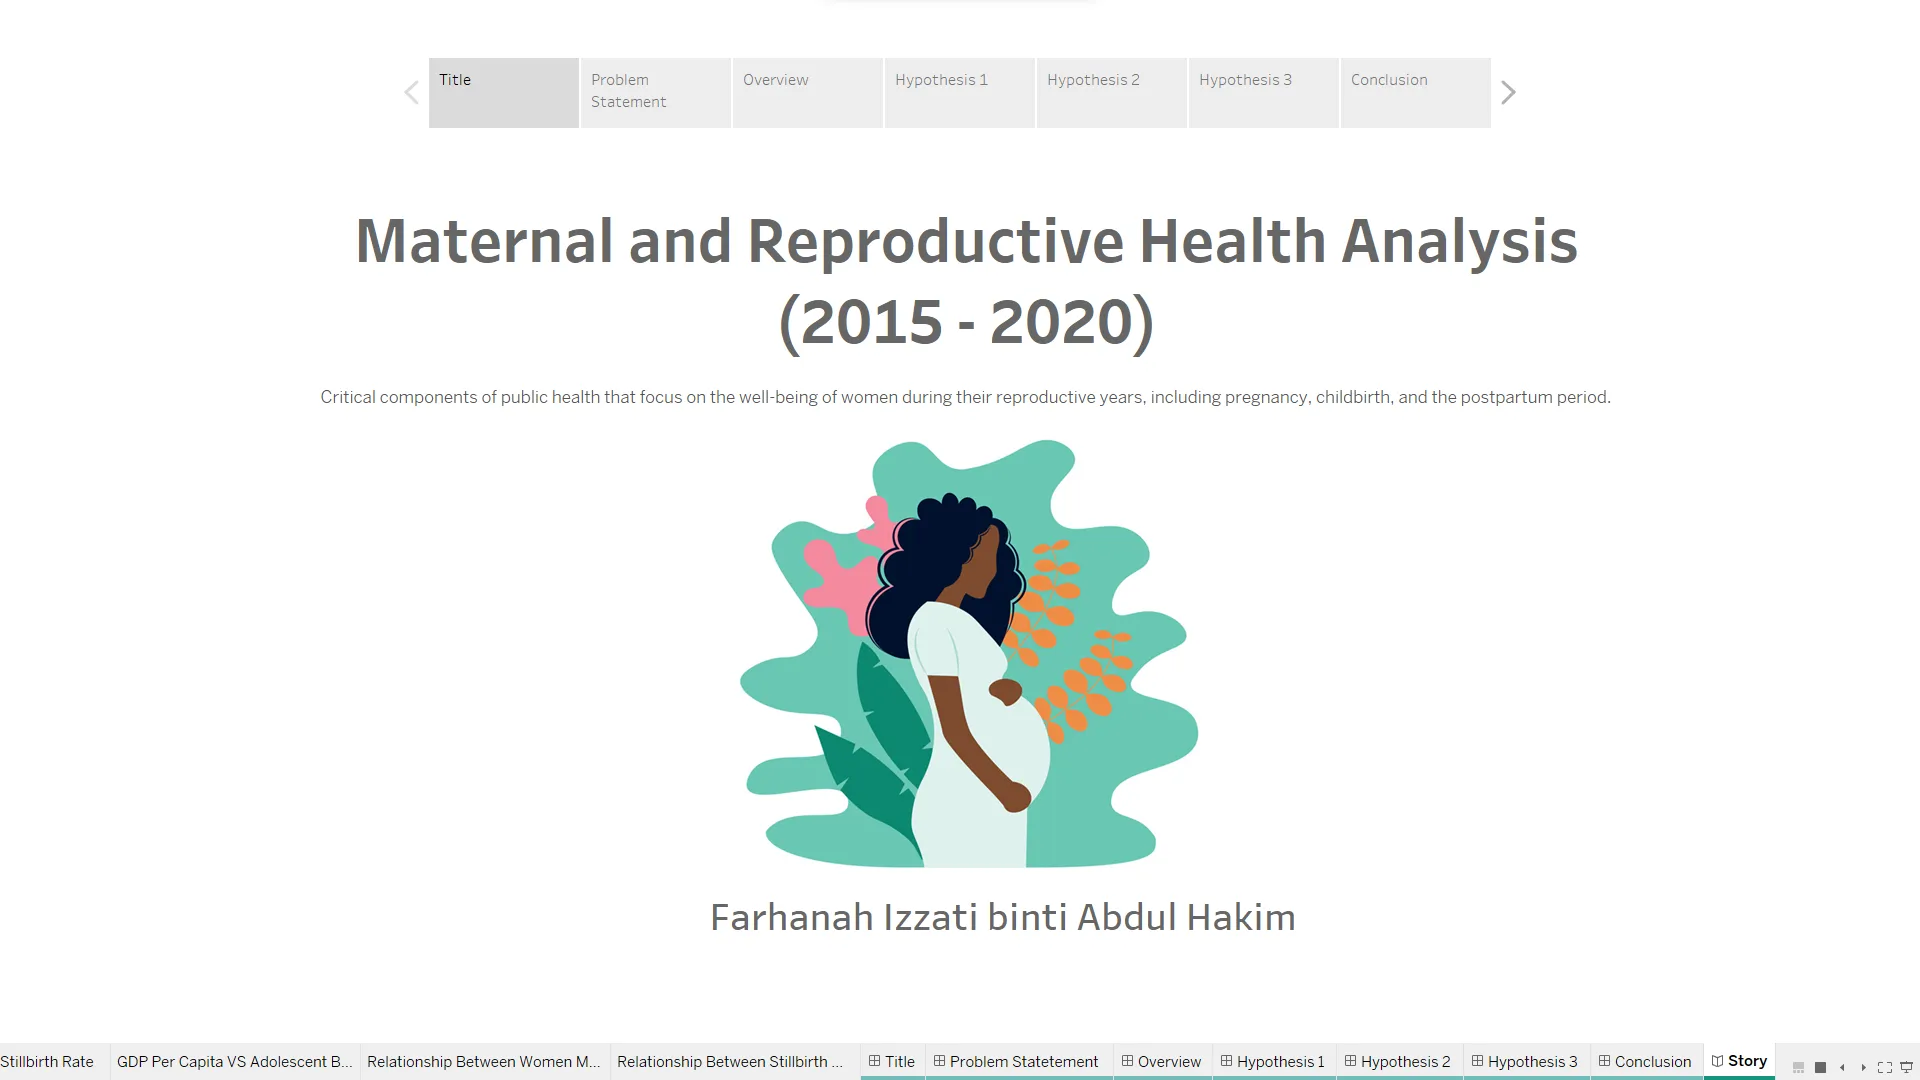 Global Maternal and Reproductive Health Analysis (2015 - 2020)